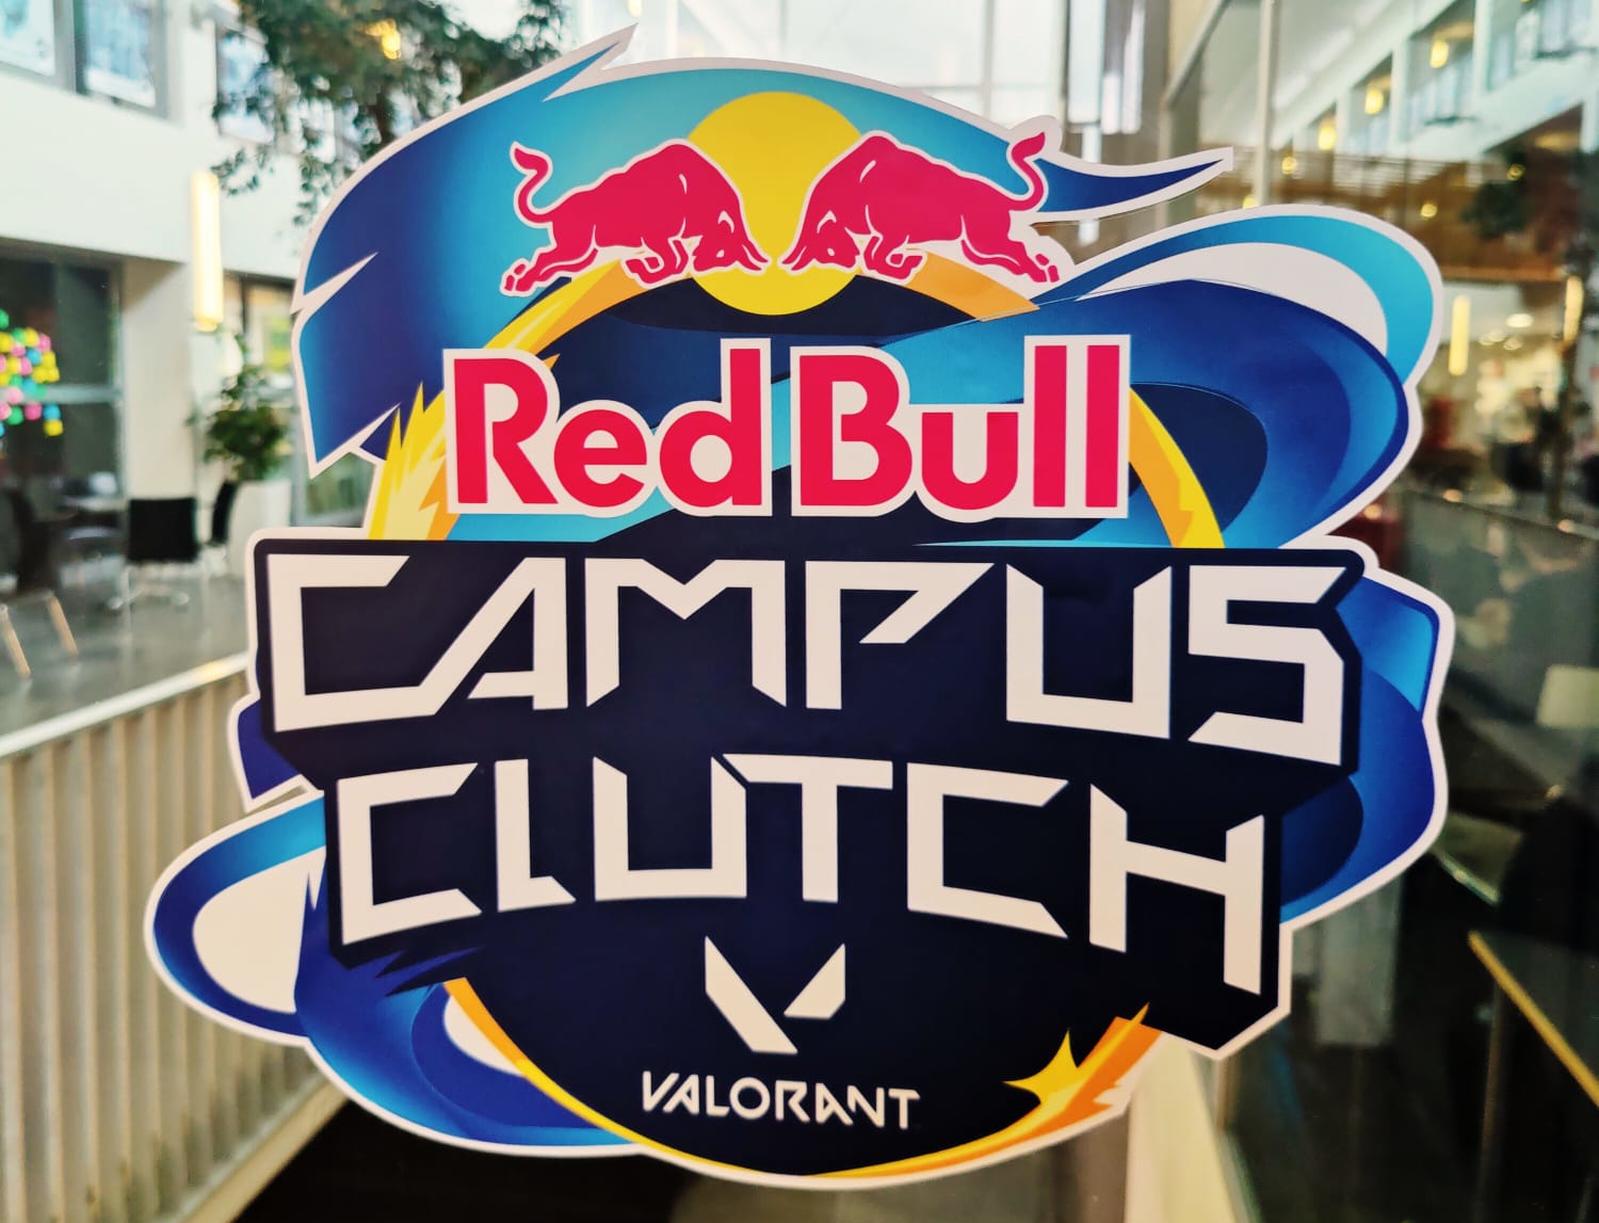 logo Red Bull Campus Clutch 